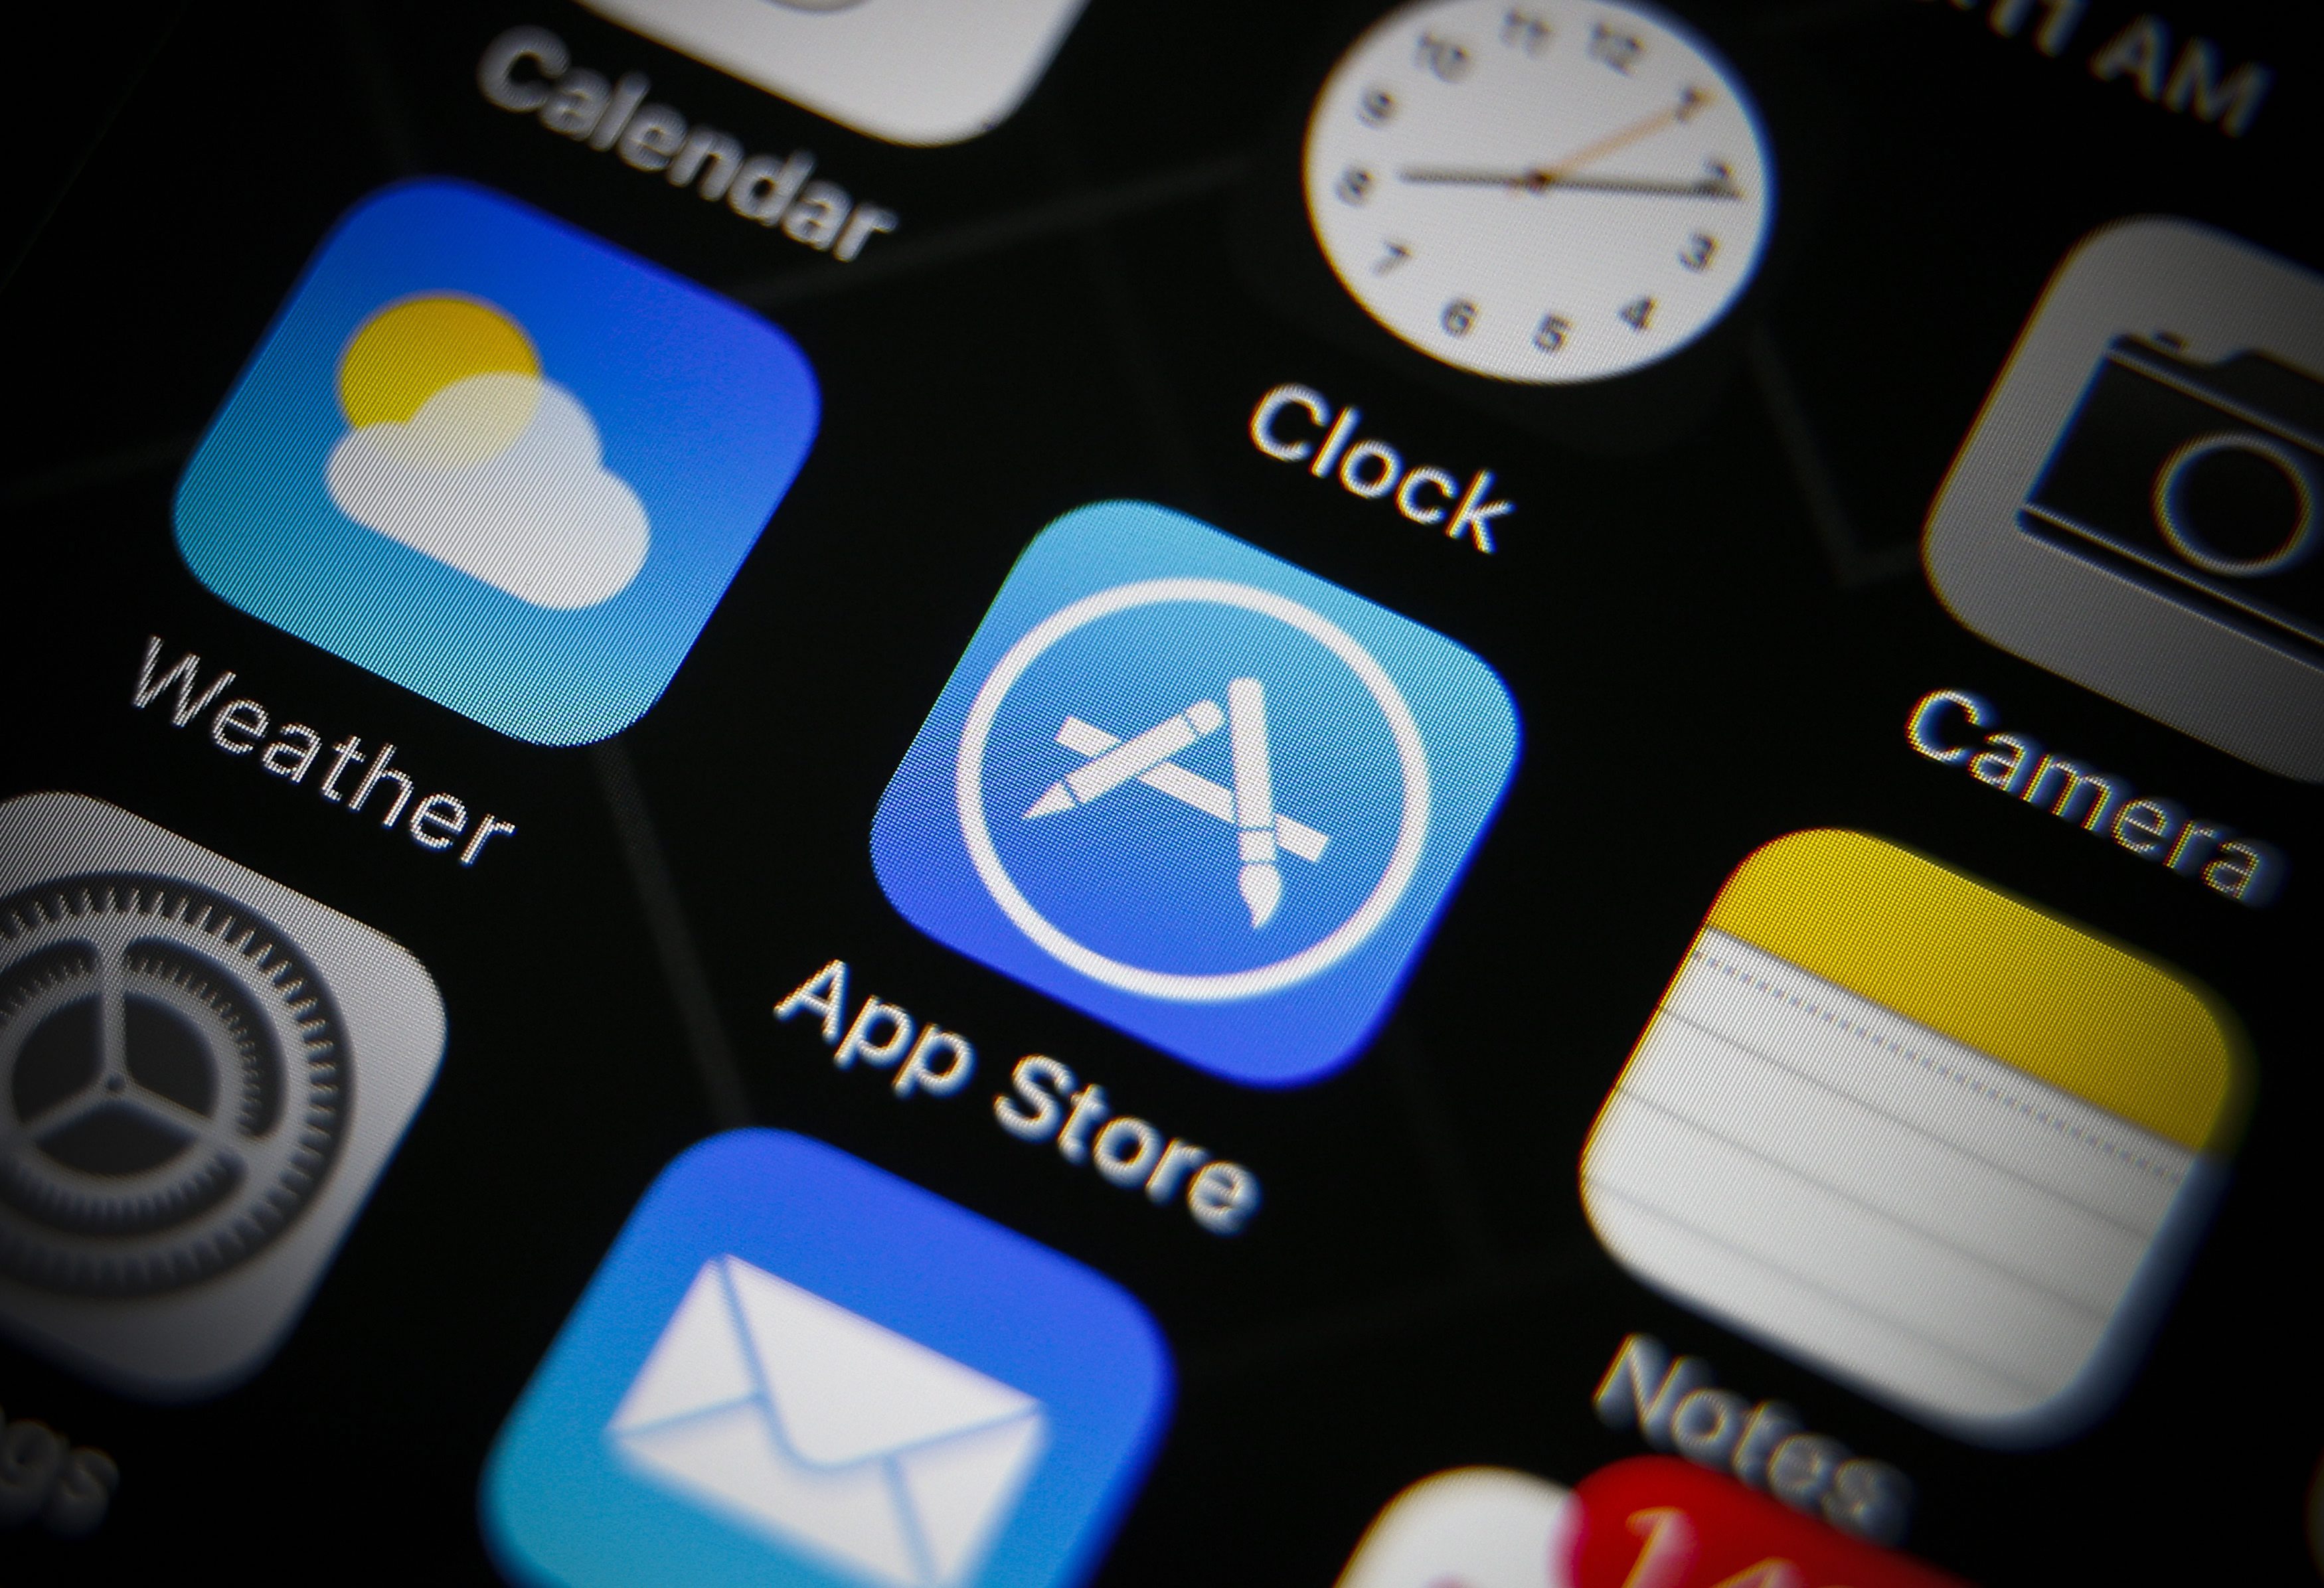 App Store 24 مارس 2020
Apple يطرح (وينمو) دعم شراء متجر التطبيقات العالمي